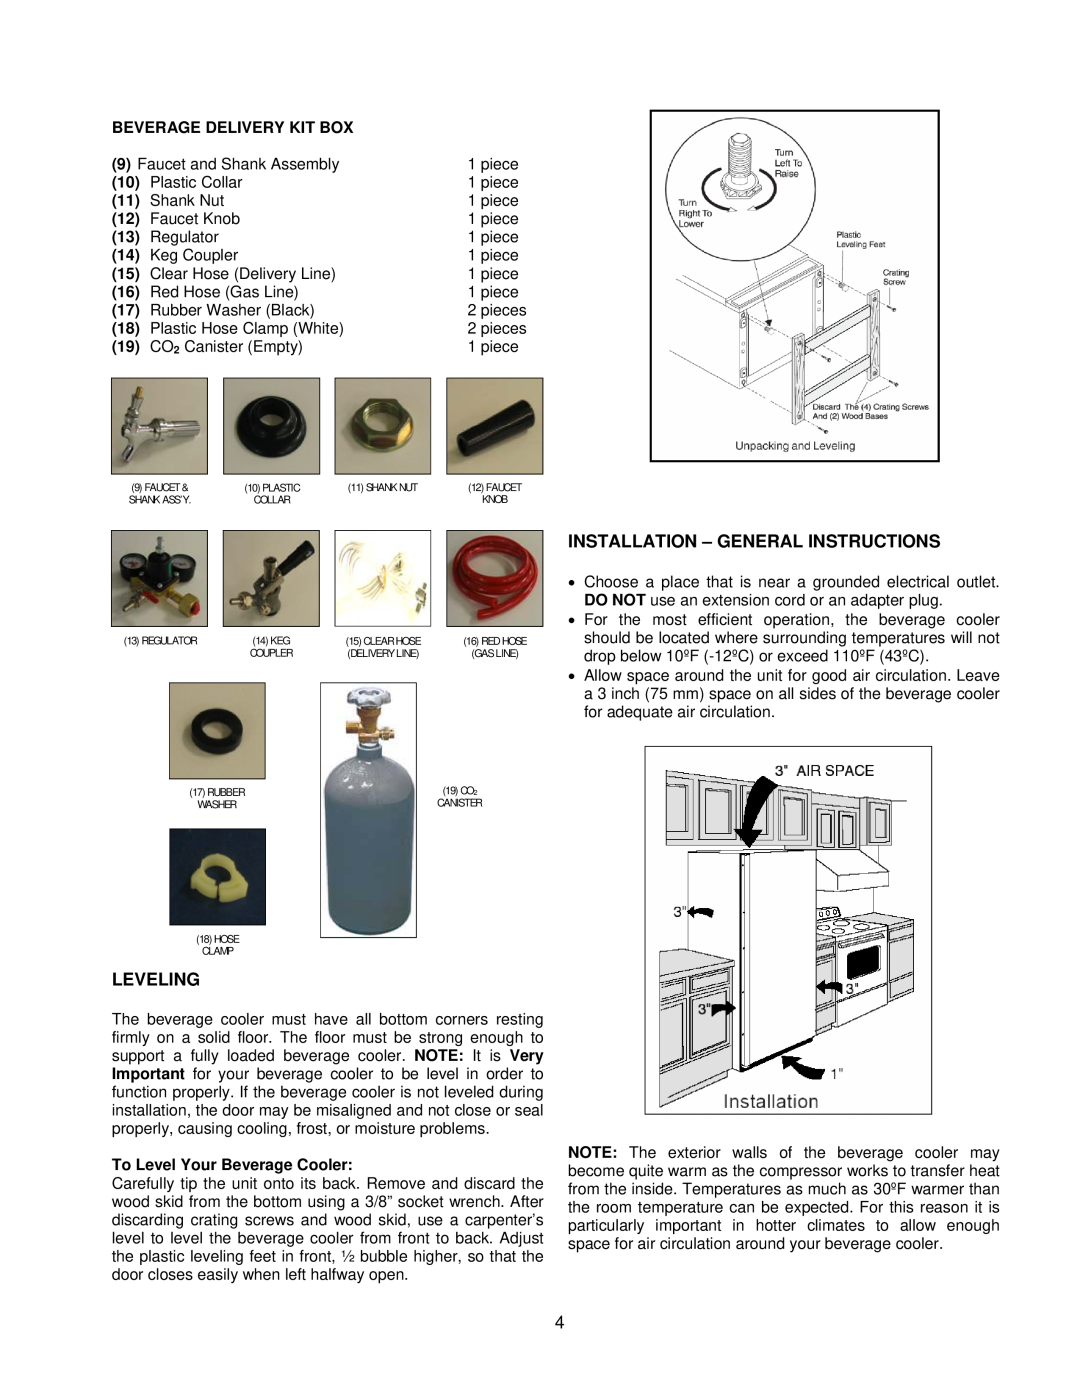 Frigidaire beverage cooler Installation - General Instructions, Leveling, Beverage Delivery Kit Box 